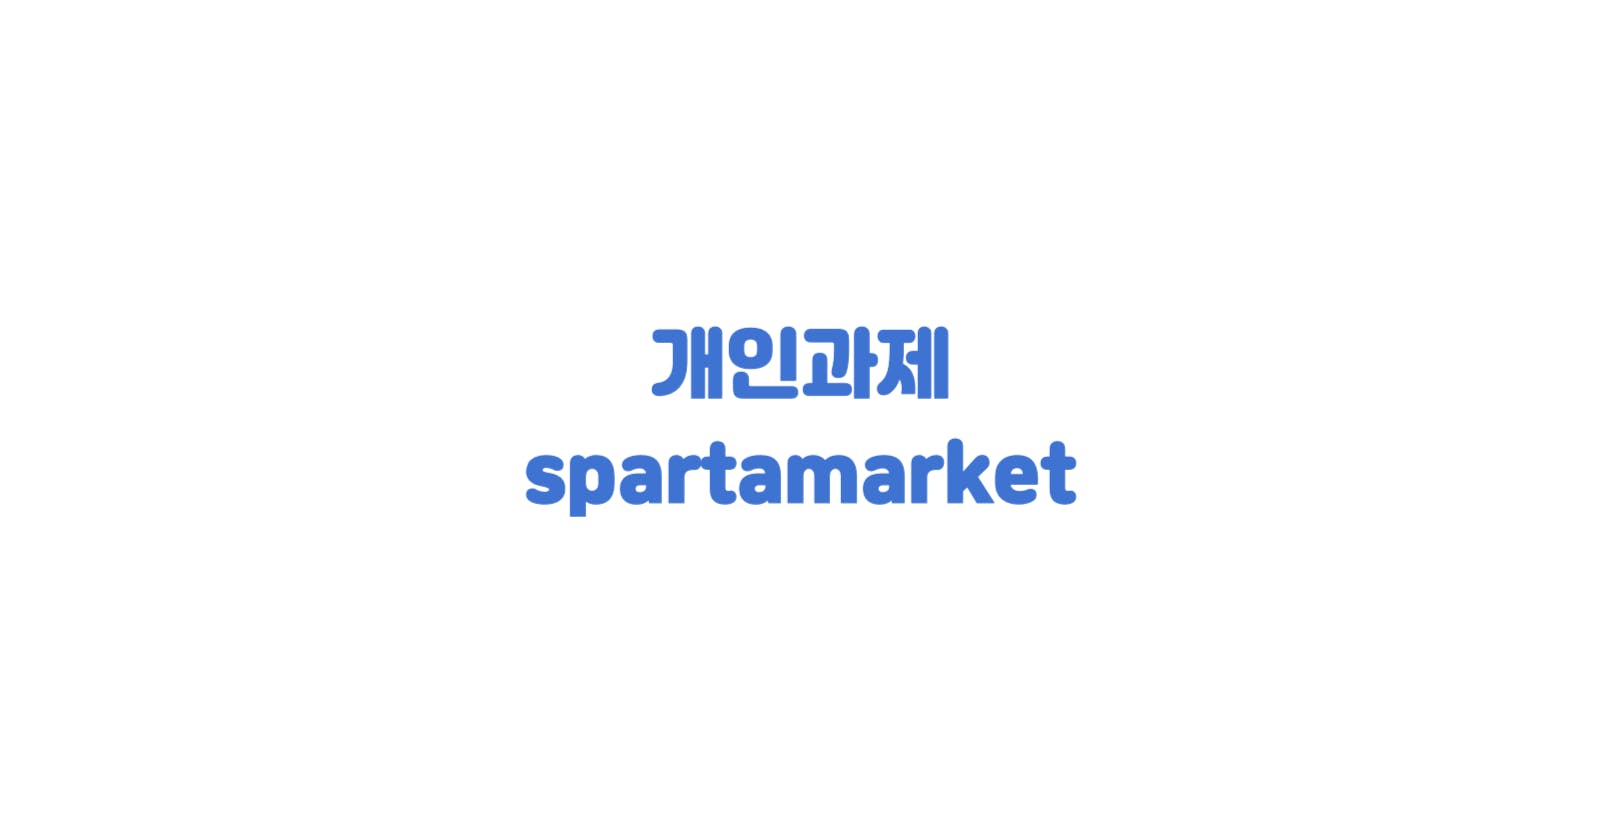 Django spartamarket ERD 작성